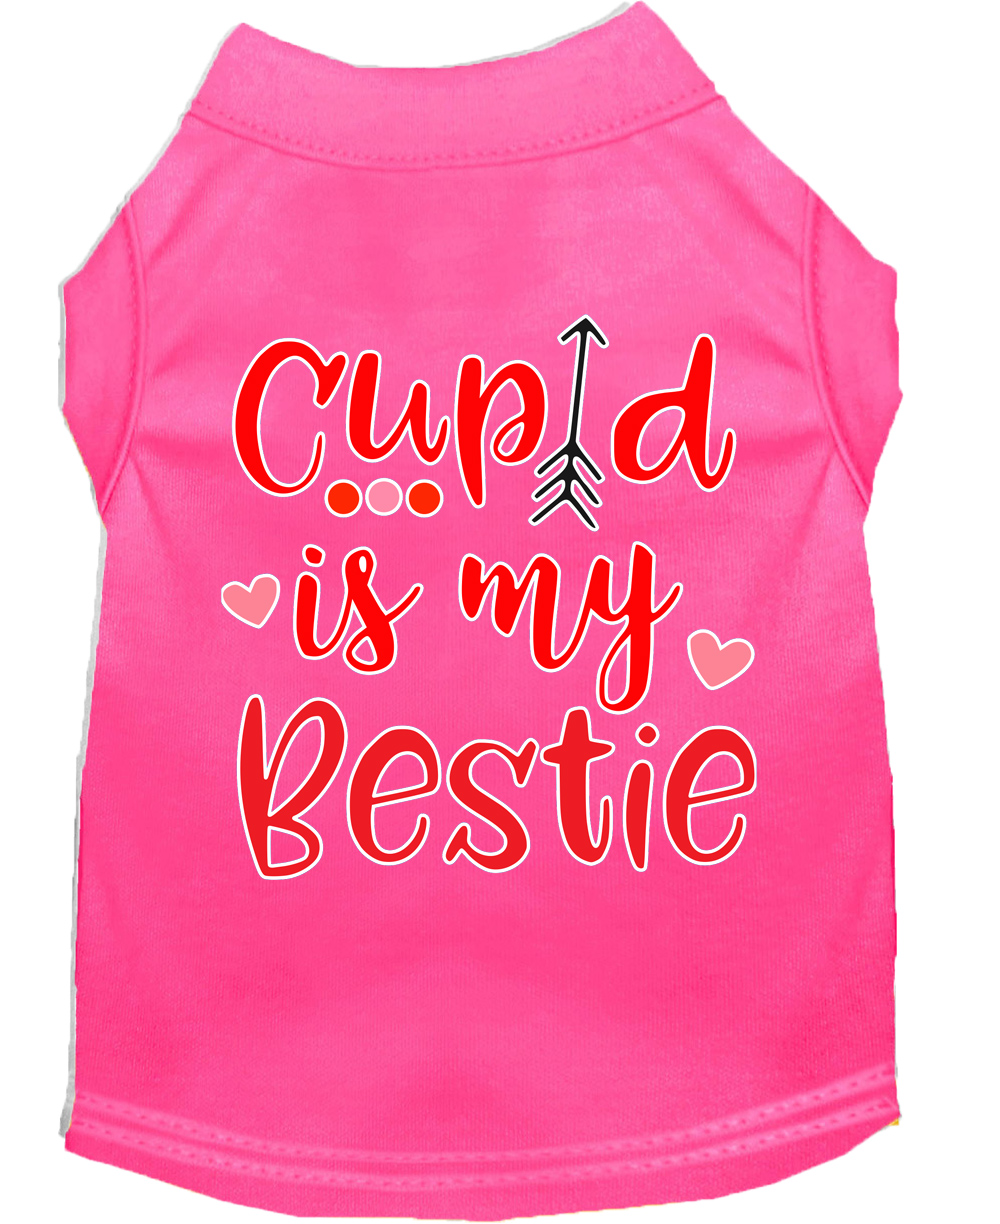 Cupid is my Bestie Screen Print Dog Shirt Bright Pink Lg